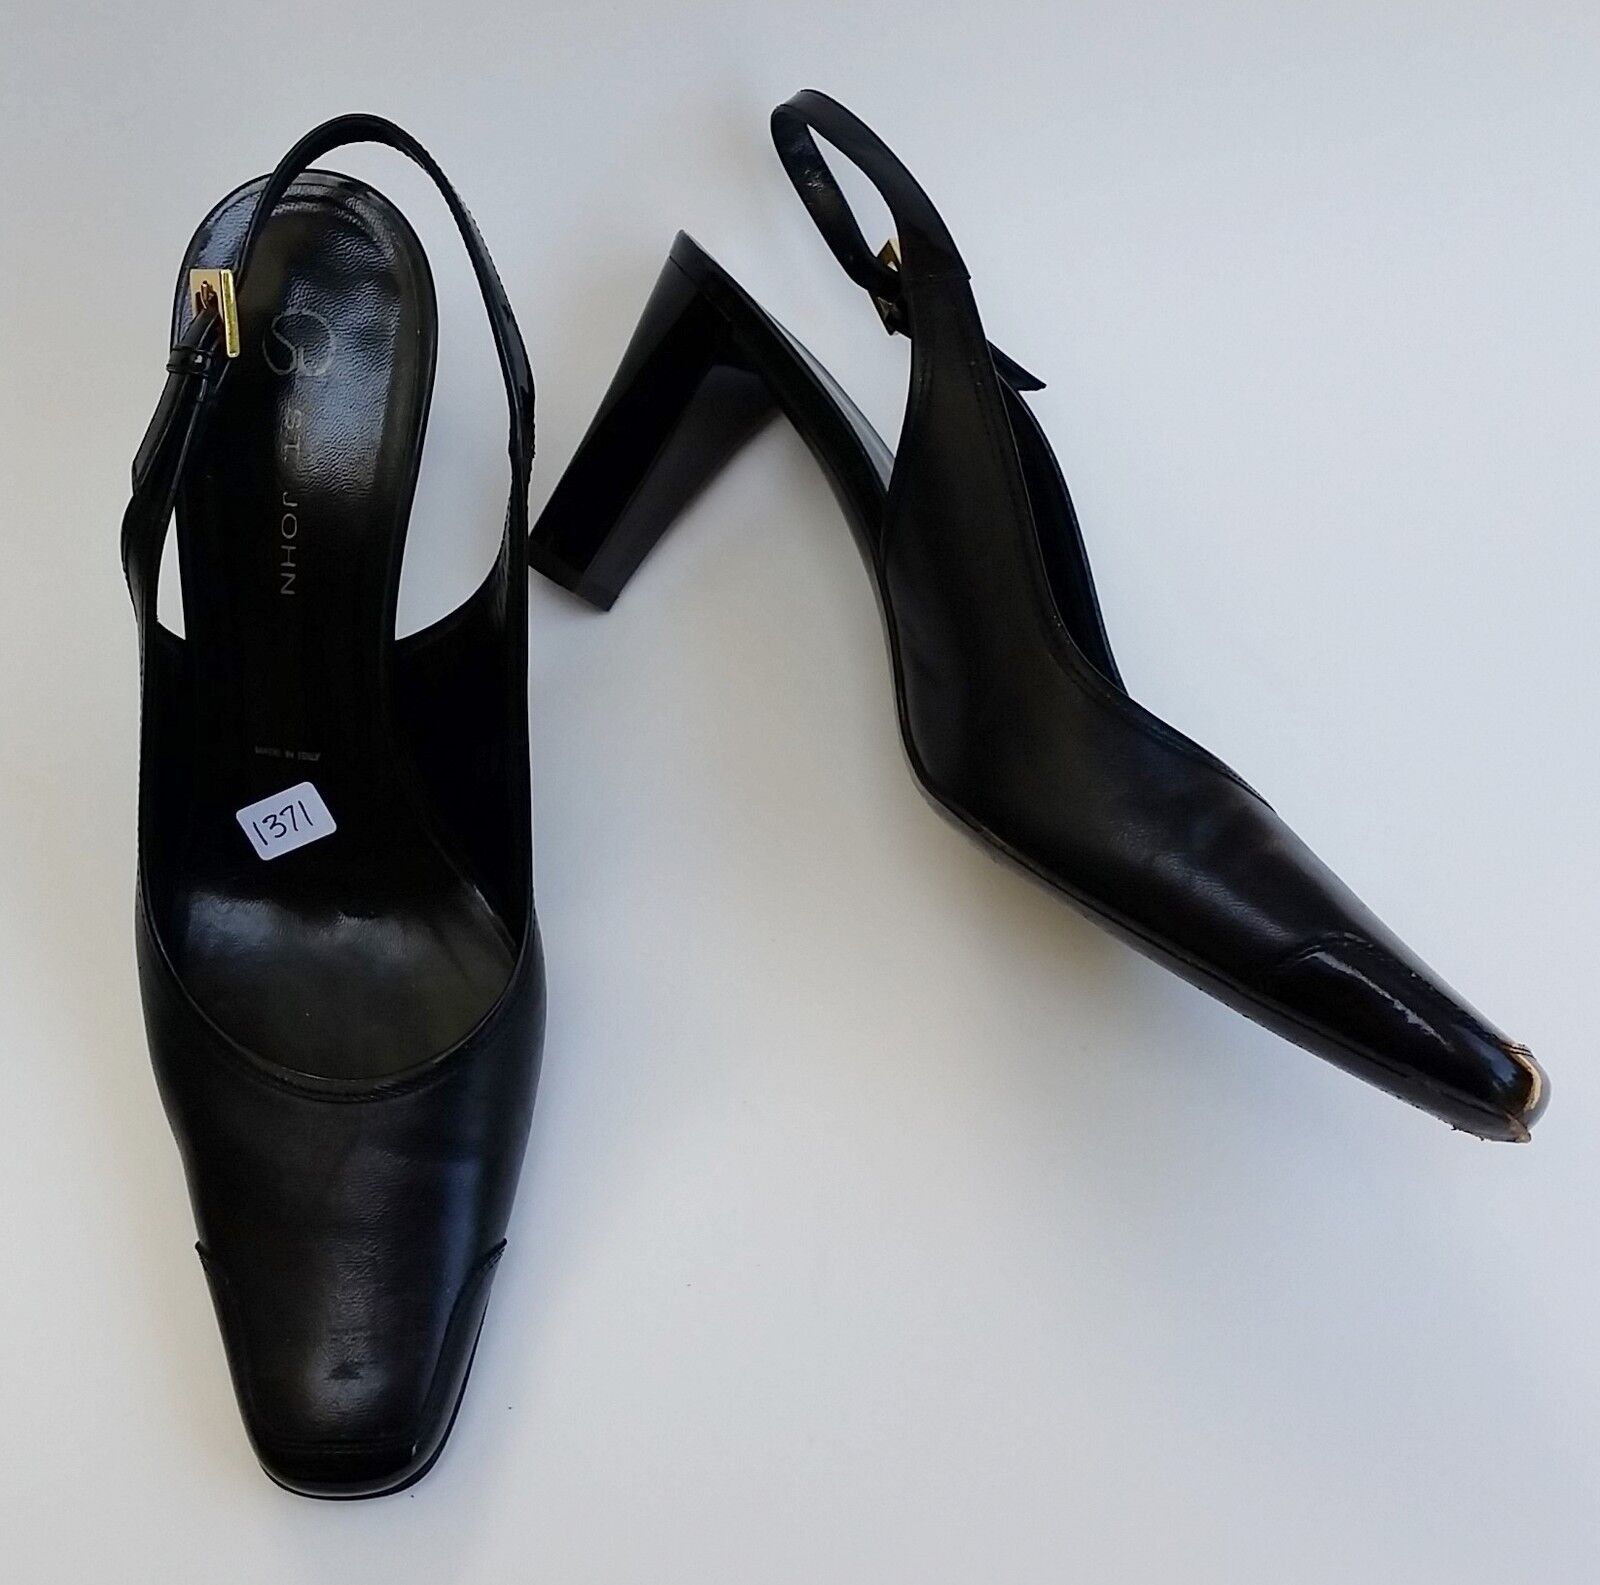 St John Womens Shoes Heels Black 8.5 Max 42% OFF Size Slingbacks Pumps Italy San Jose Mall